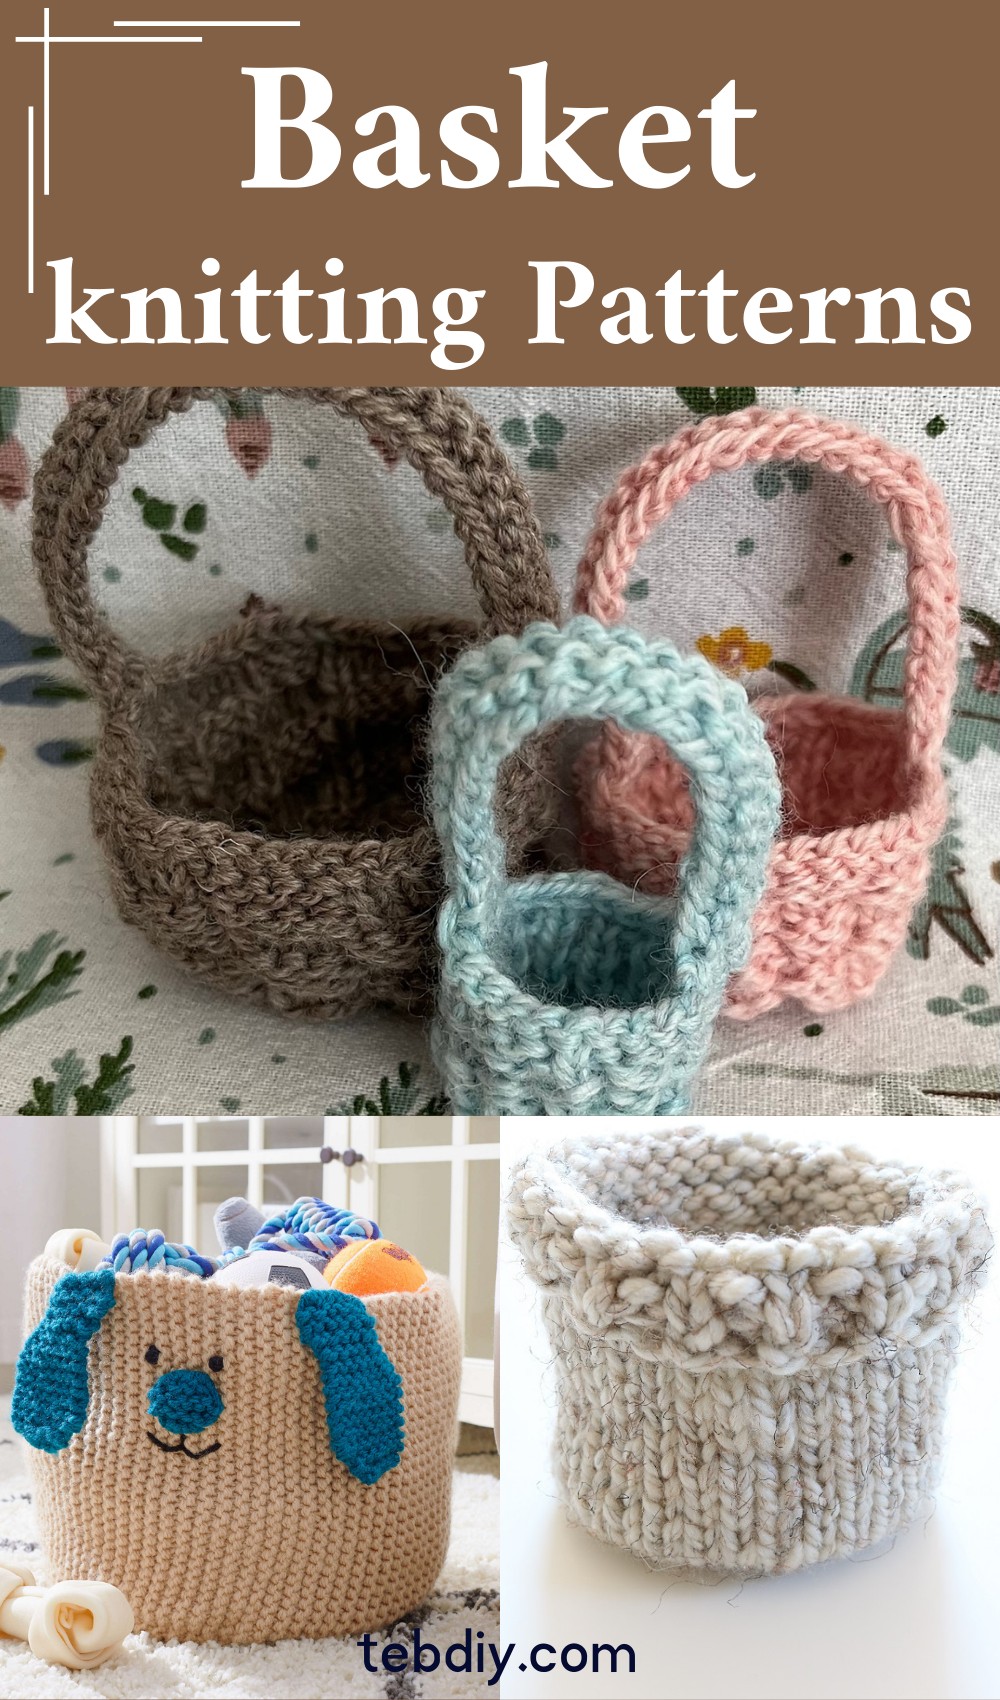 Knit Spring Hat Patterns